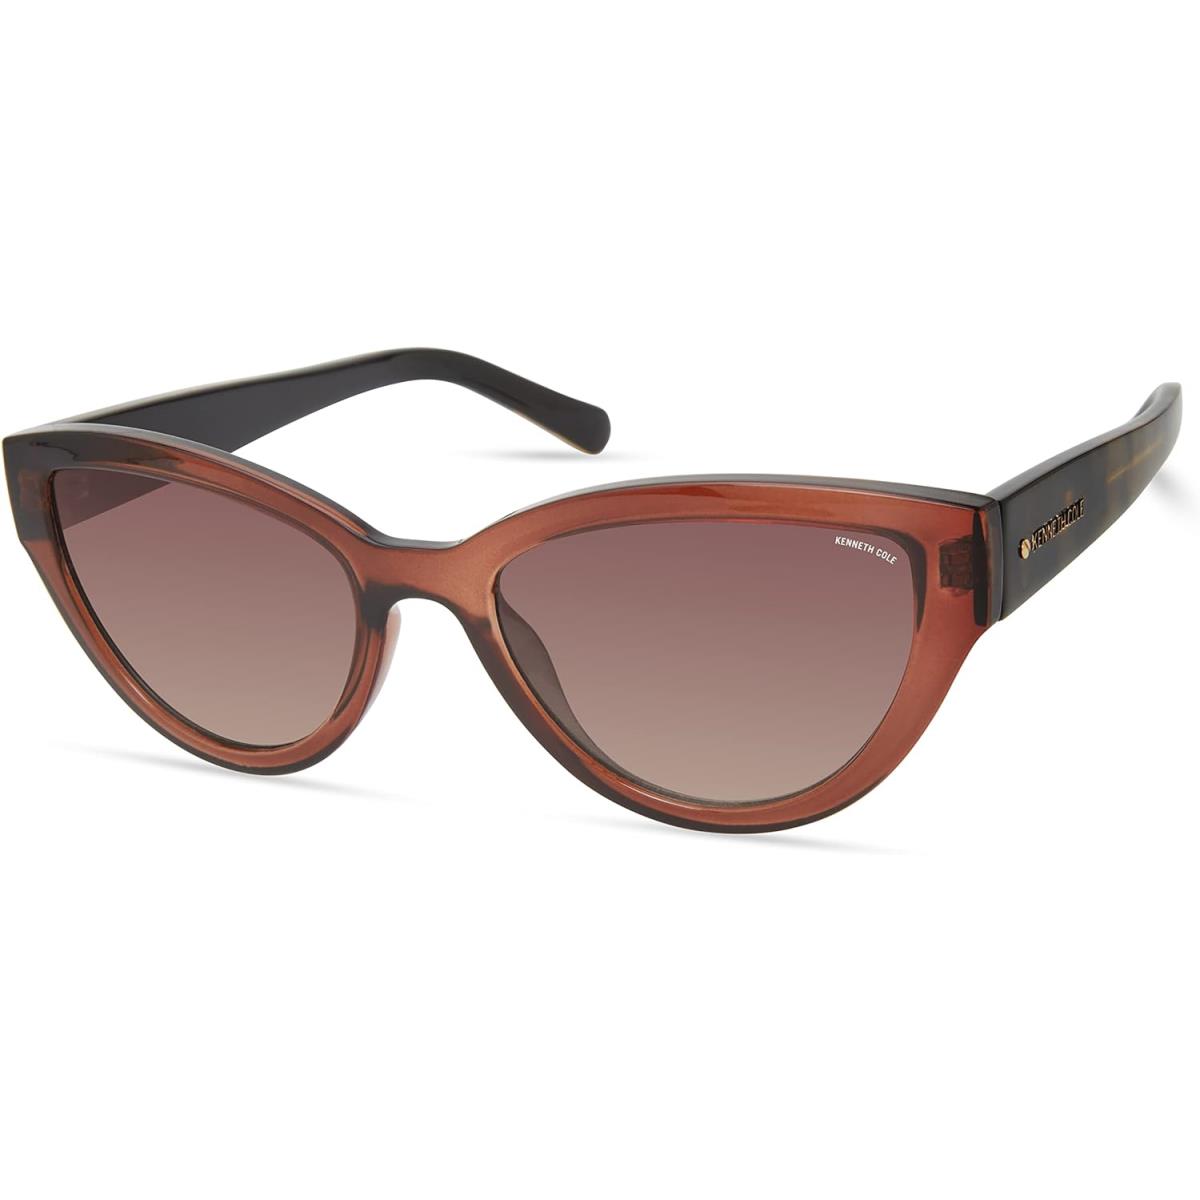 Kenneth Cole Women`s Cat Sunglasses Shiny Dark Brown / Gradient Brown